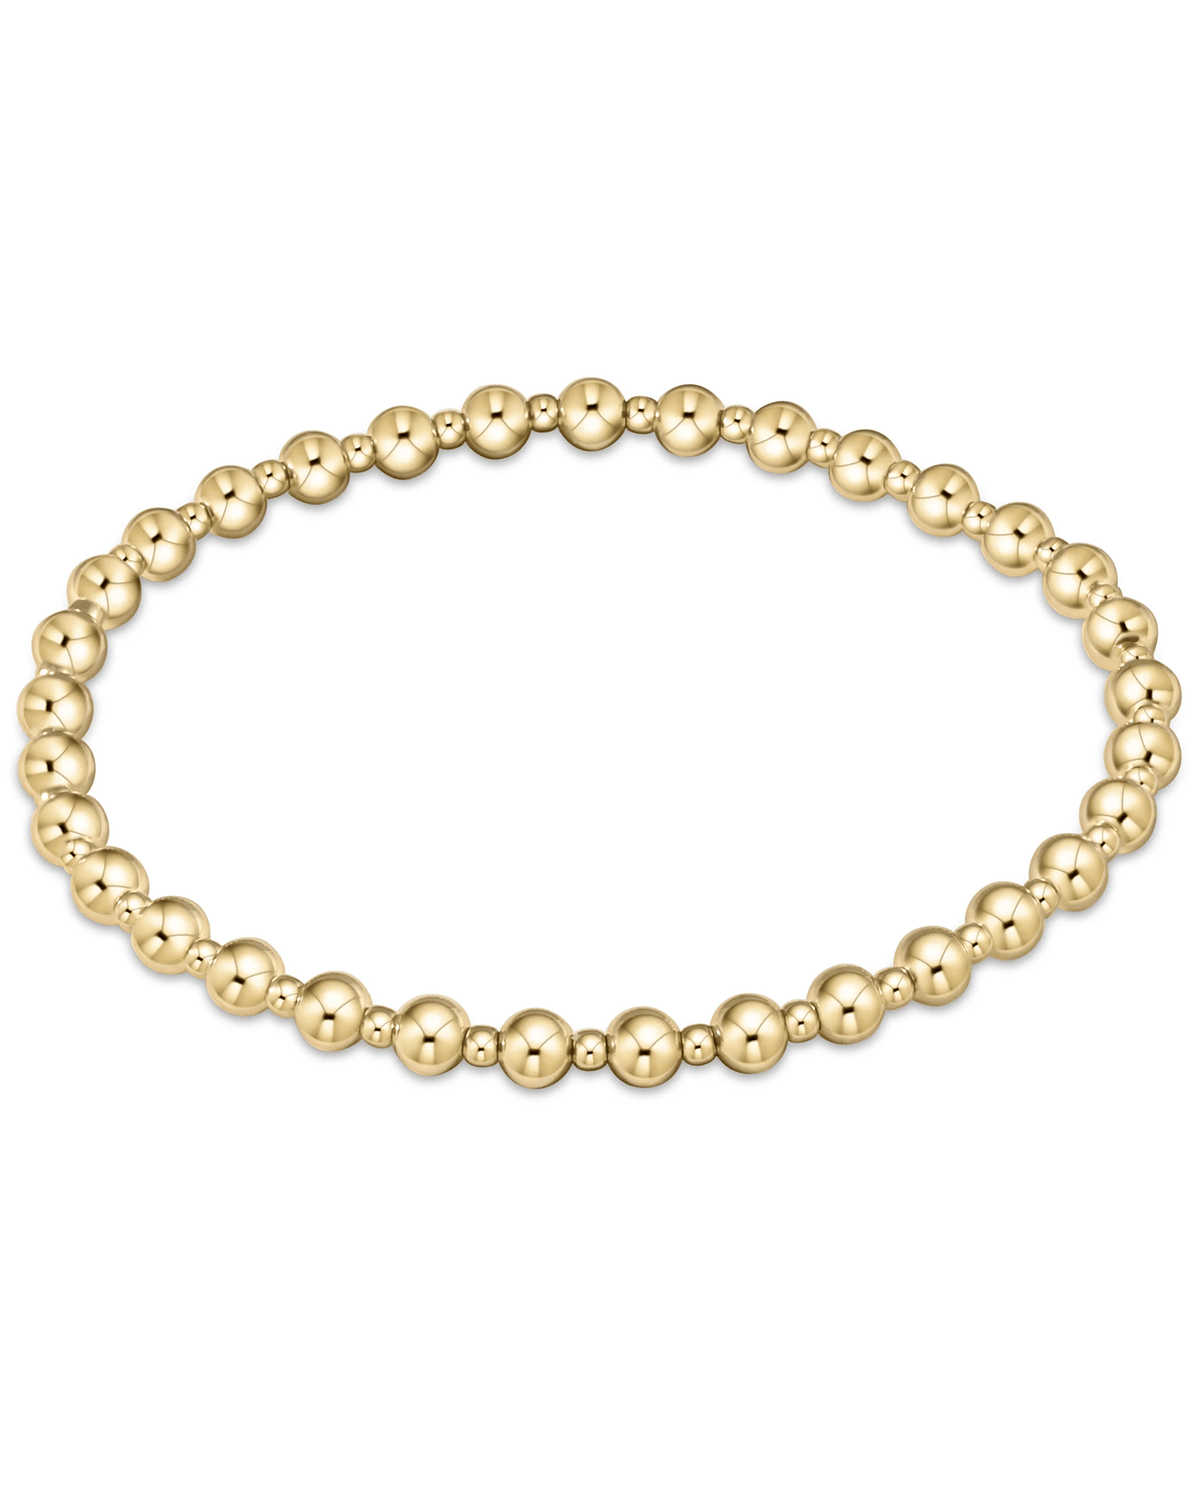 enewton Jewelry 14K Gold Filled Classic Grateful Pattern 4mm Bead Bracelet - Gold